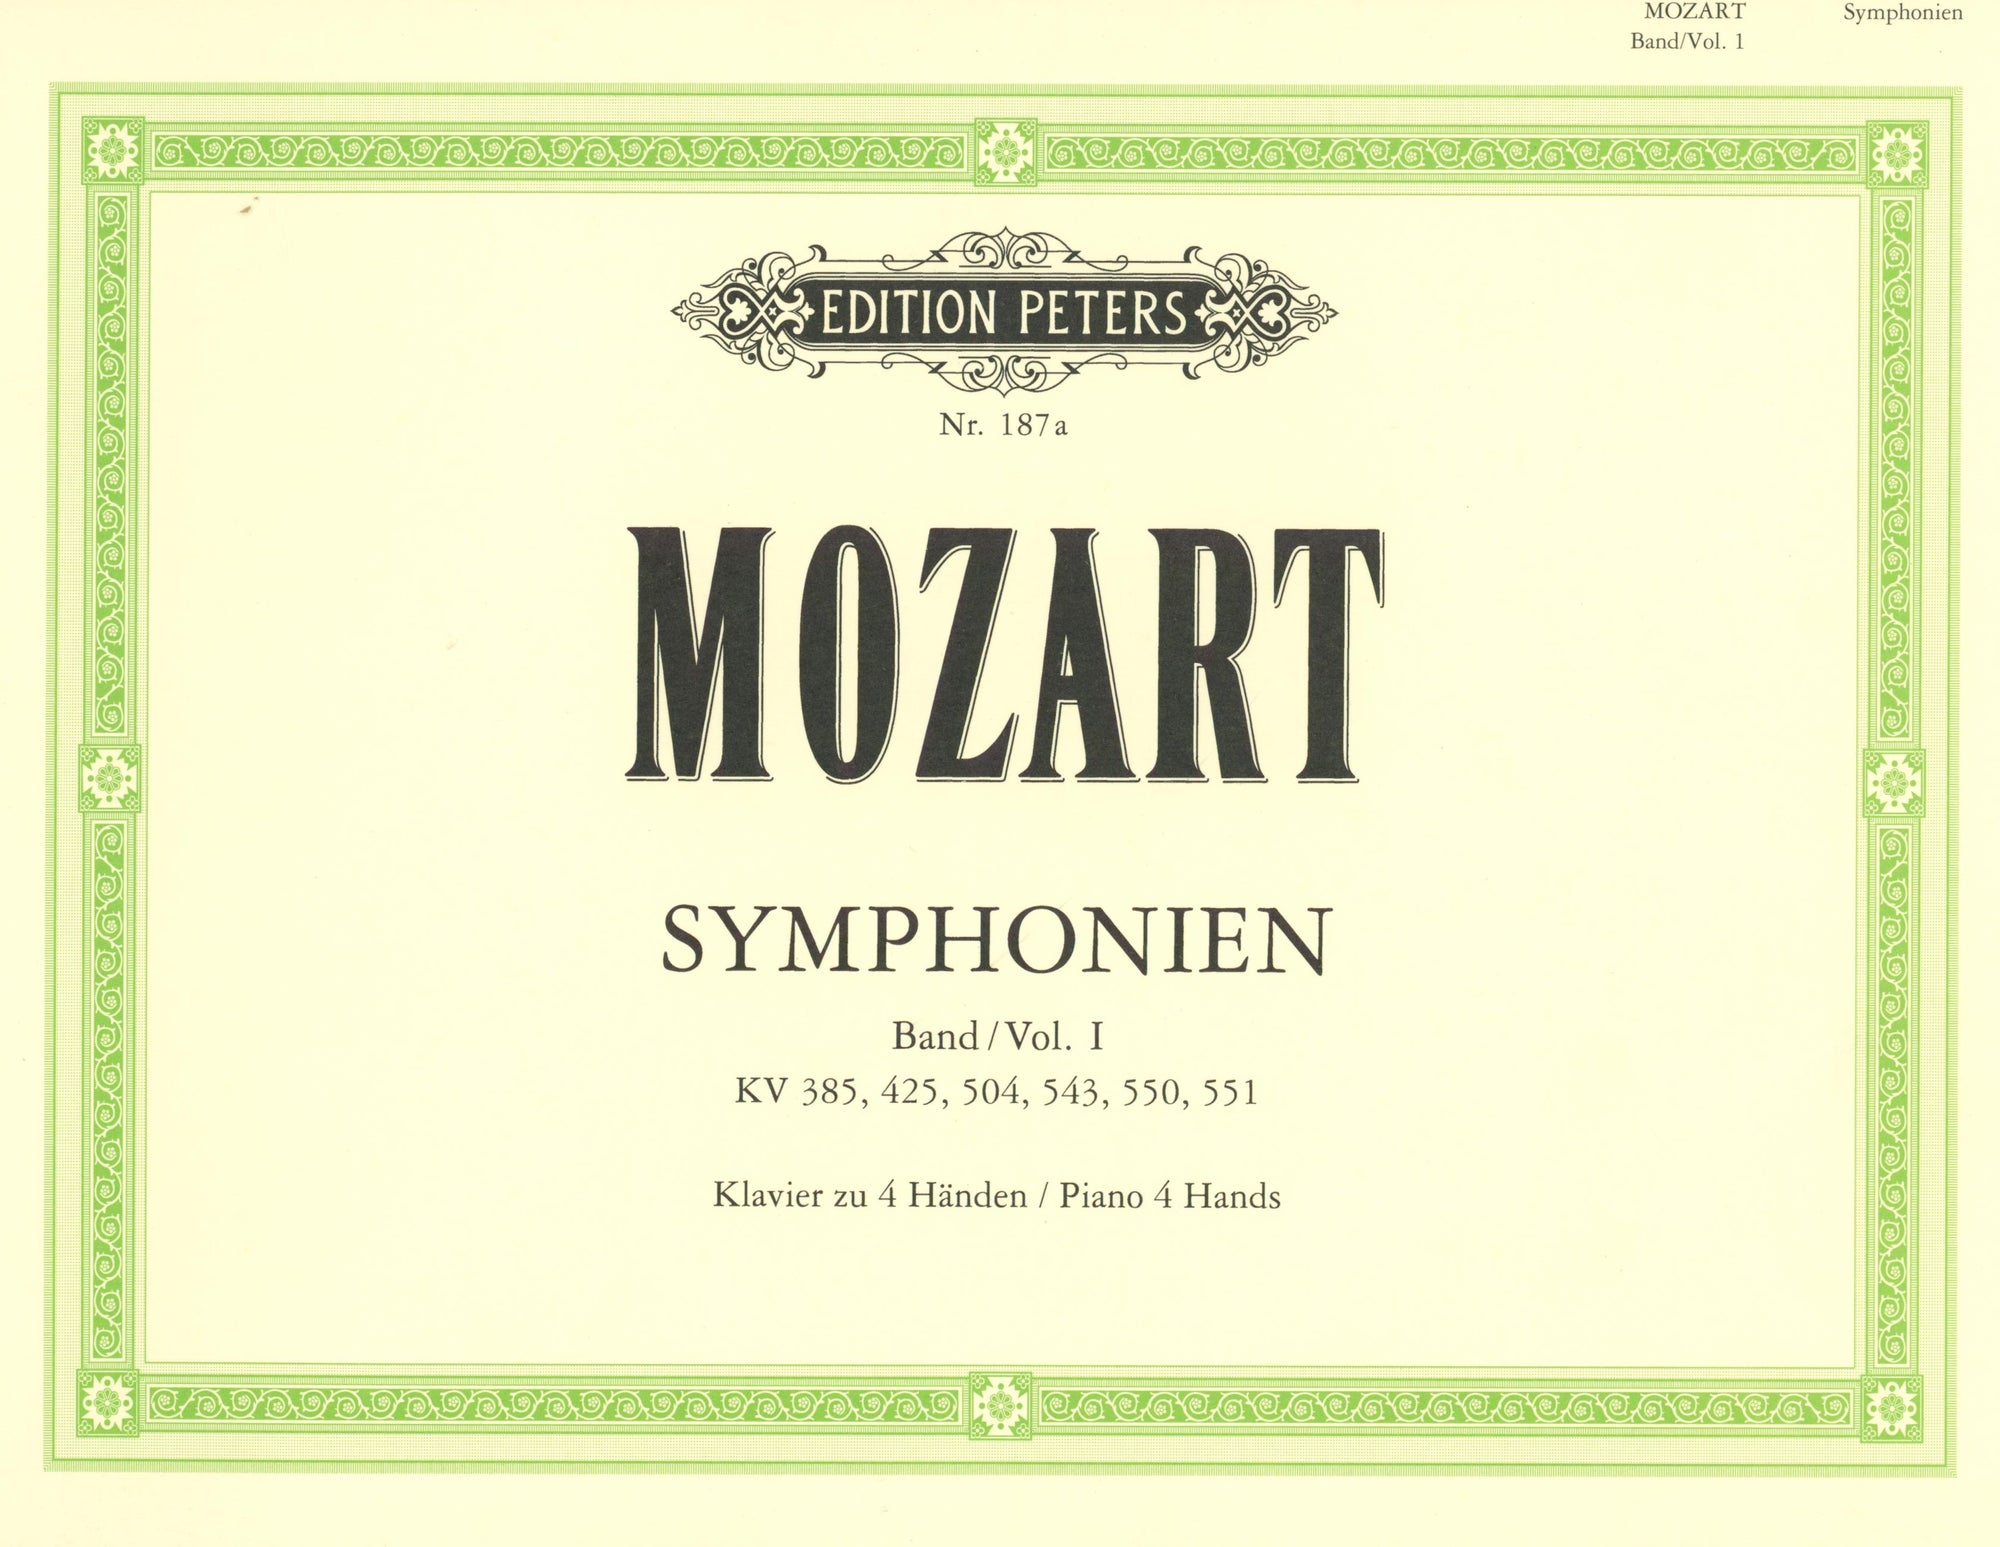 Mozart: Symphonies arr. for piano 4-hands - Volume 1 (K. 385, 425, 504, 543, 550, 551)